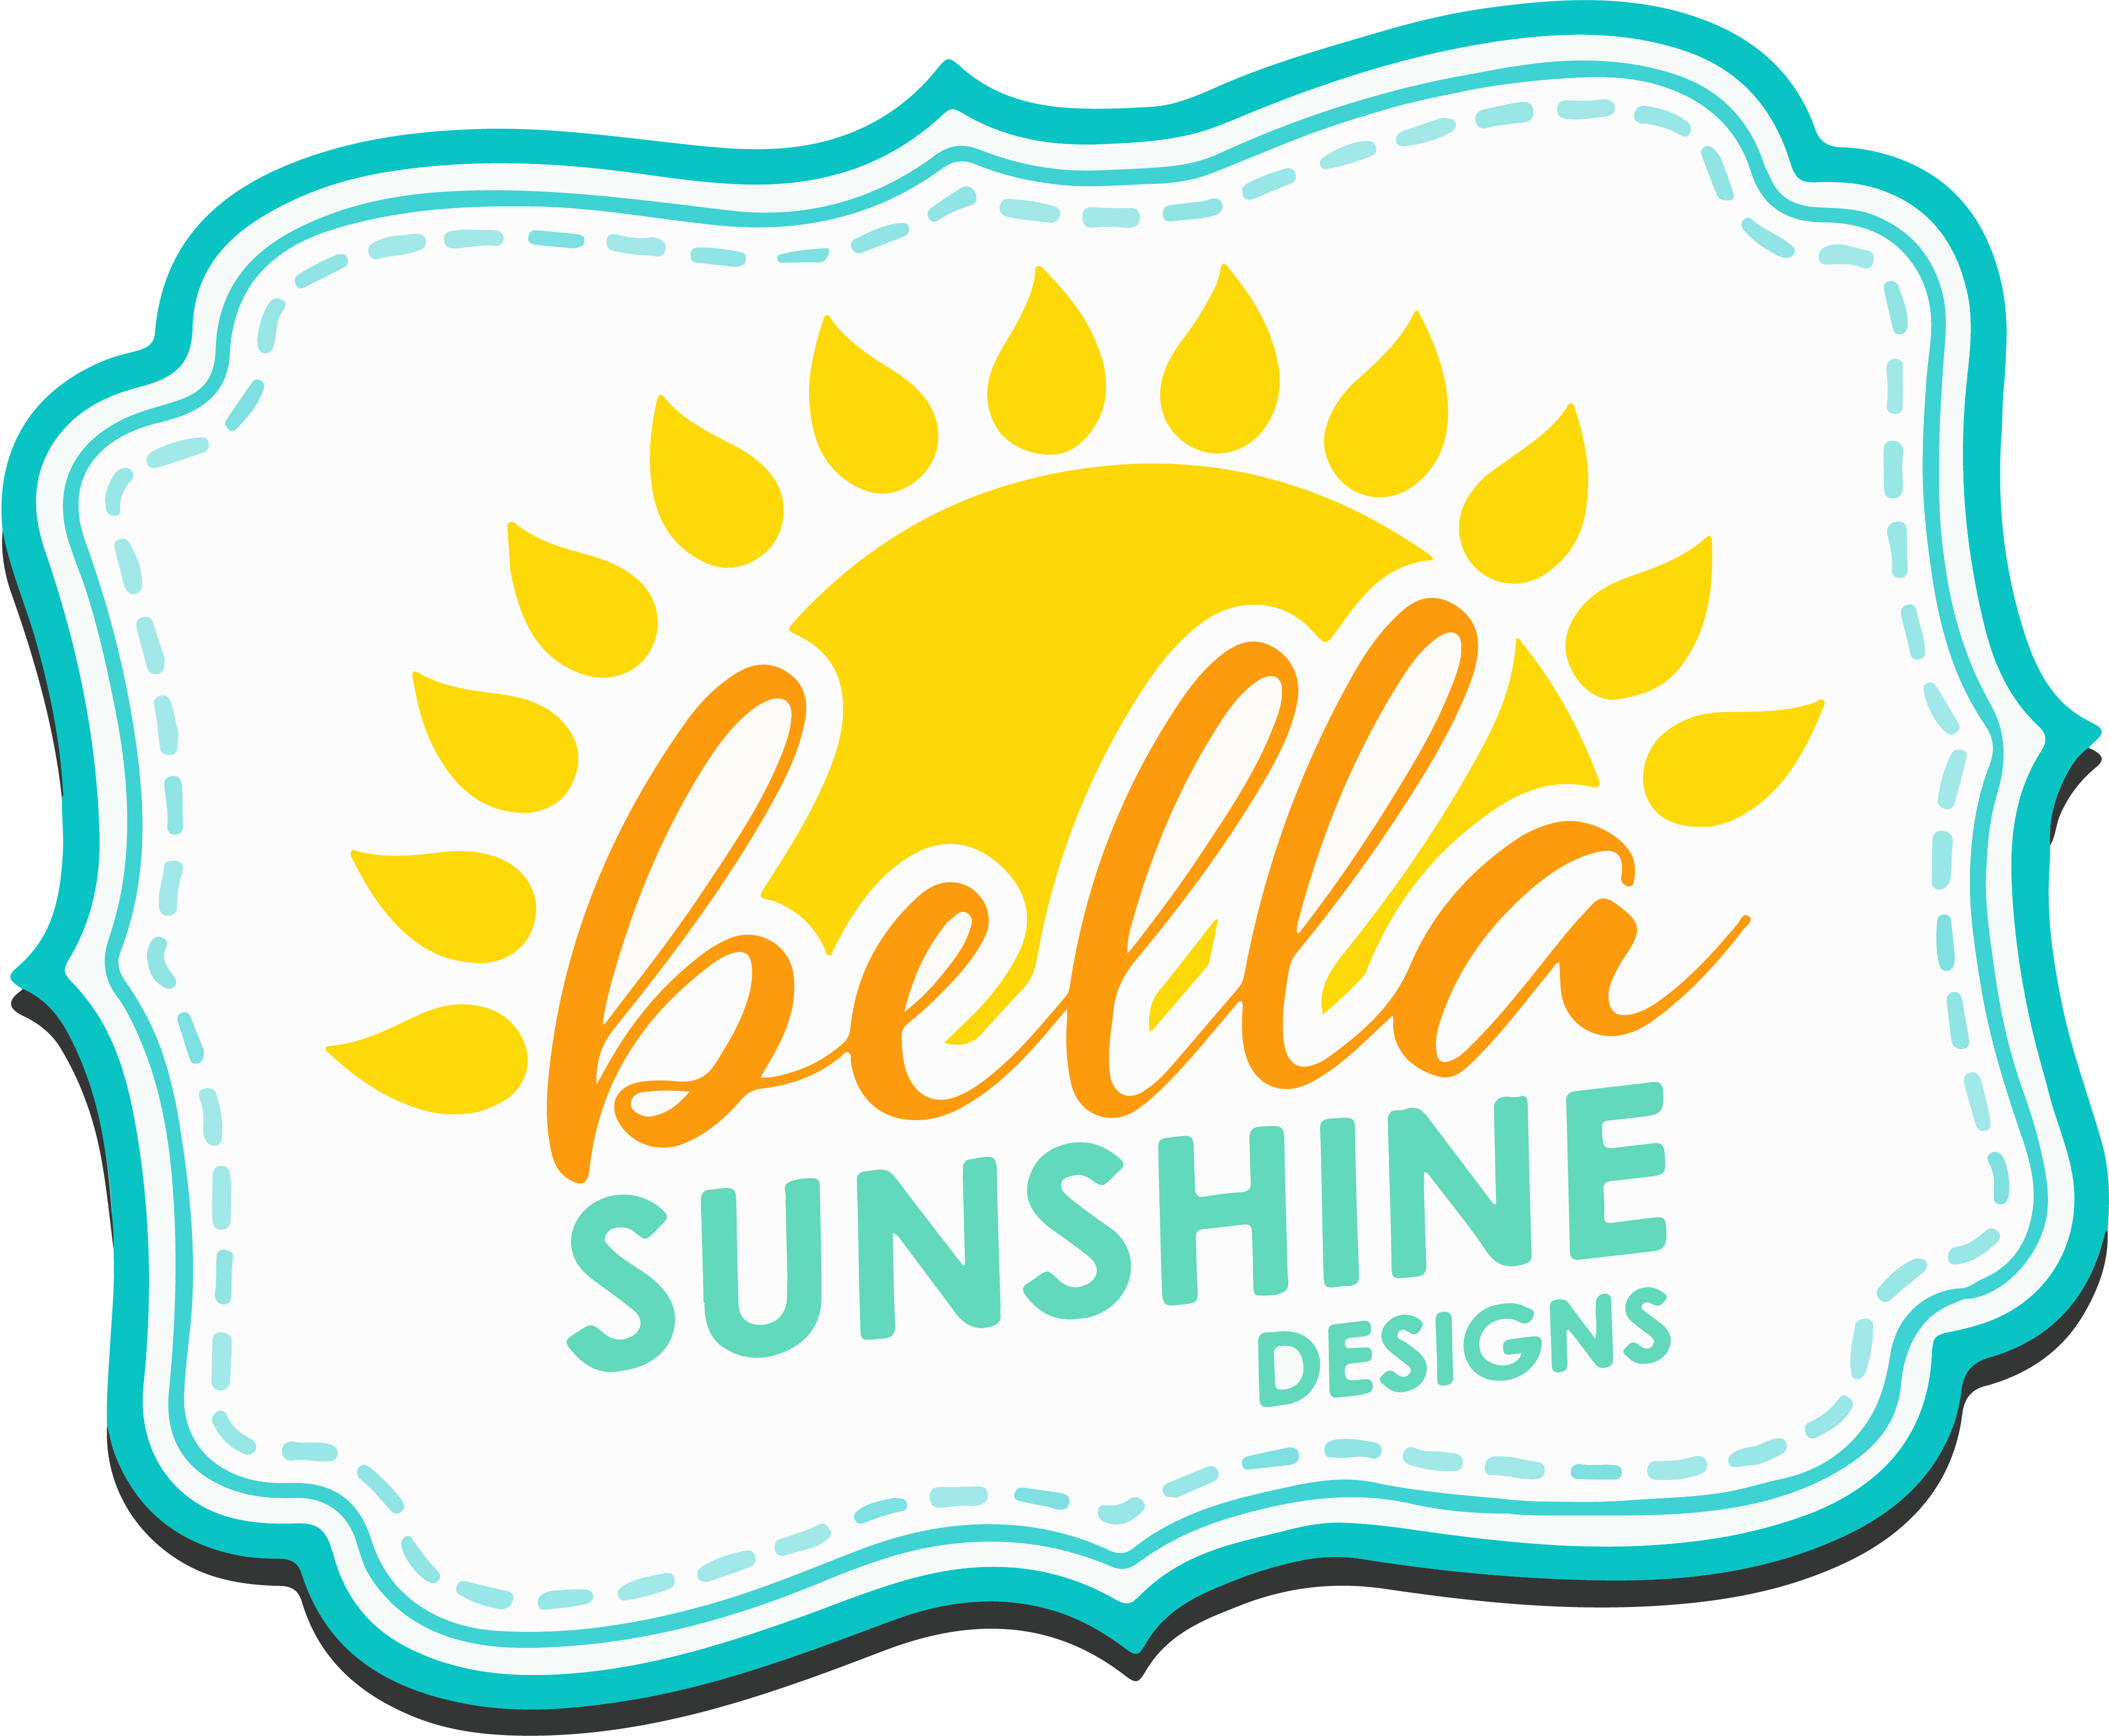 Bella Sunshine Designs